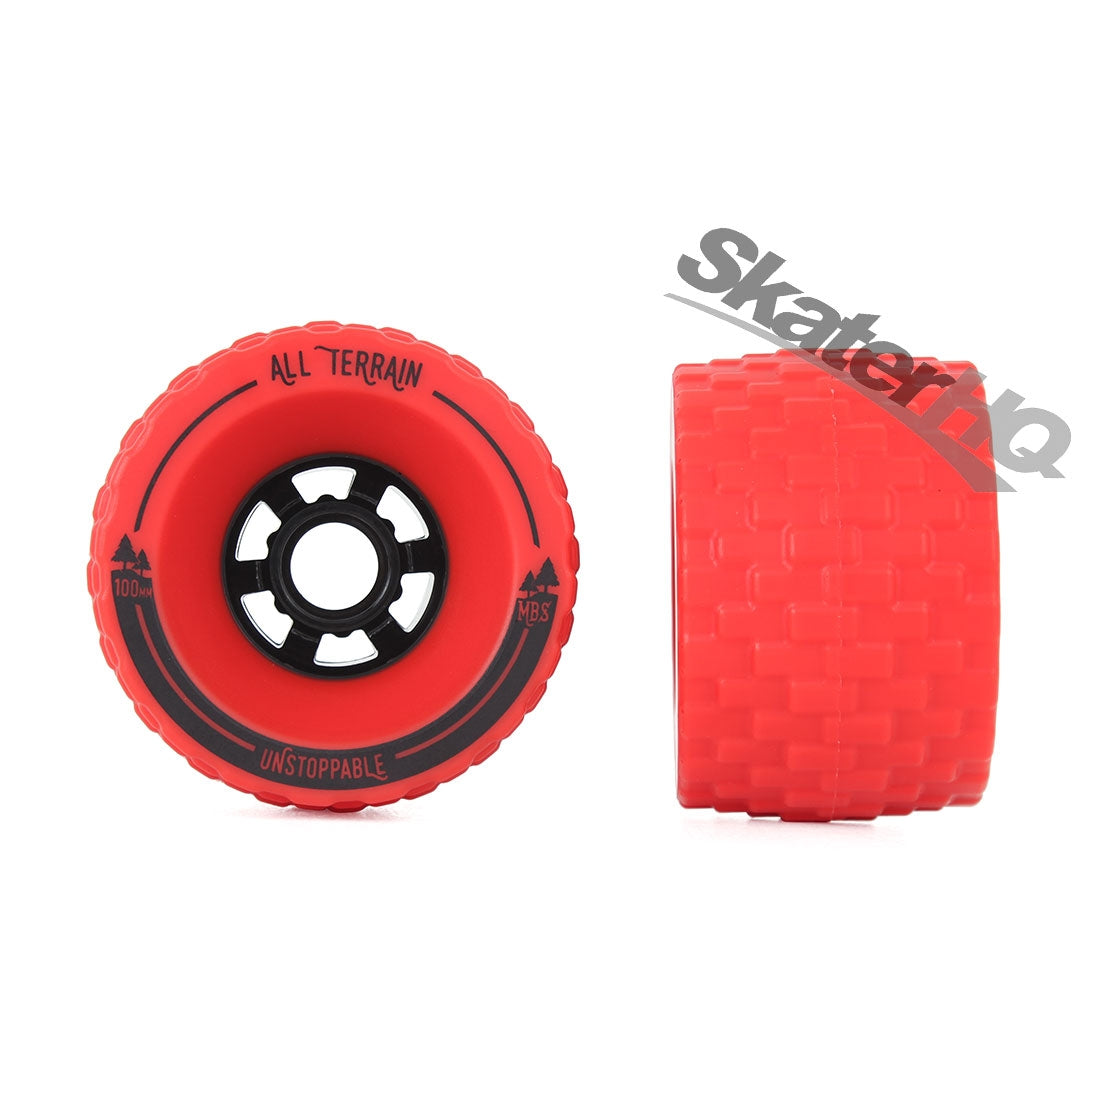 MBS All-Terrain 100mm Wheels 4pk - Red Skateboard Wheels